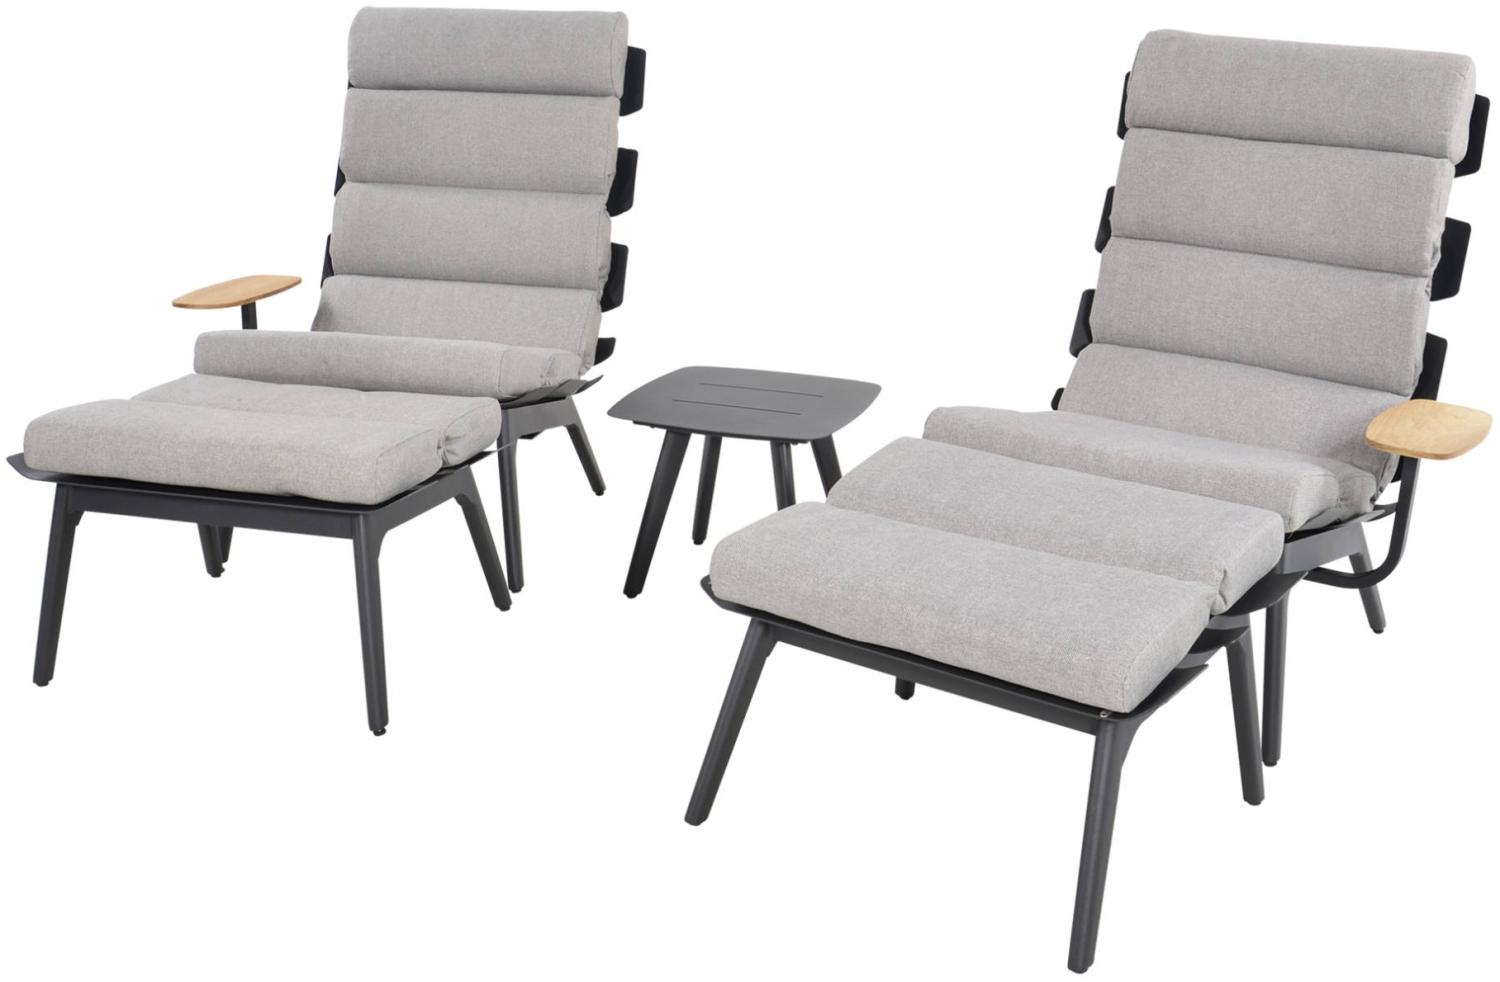 Balkon-Sitzgruppe VENTUS inkl. 2 Sessel, 2 Fußbänke & Tisch in grau Bild 1